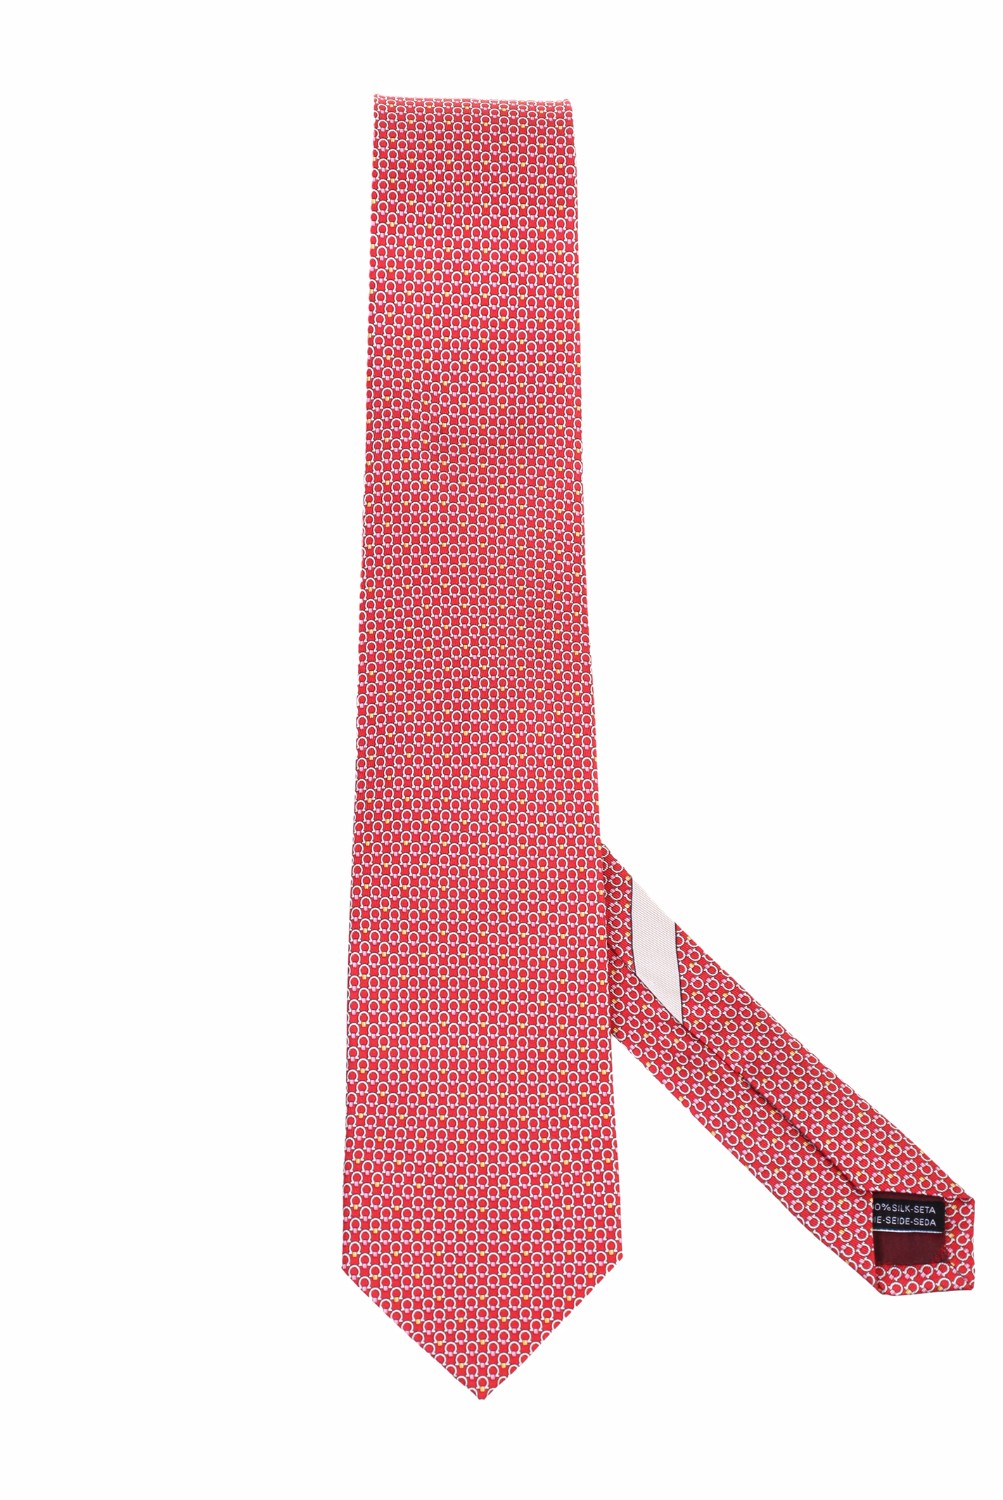 shop SALVATORE FERRAGAMO  Cravatta: Salvatore Ferragamo cravatta in seta stampa Gancini.
Composizione: 100% seta.
Made in Italy.. 357405-R number 5028388